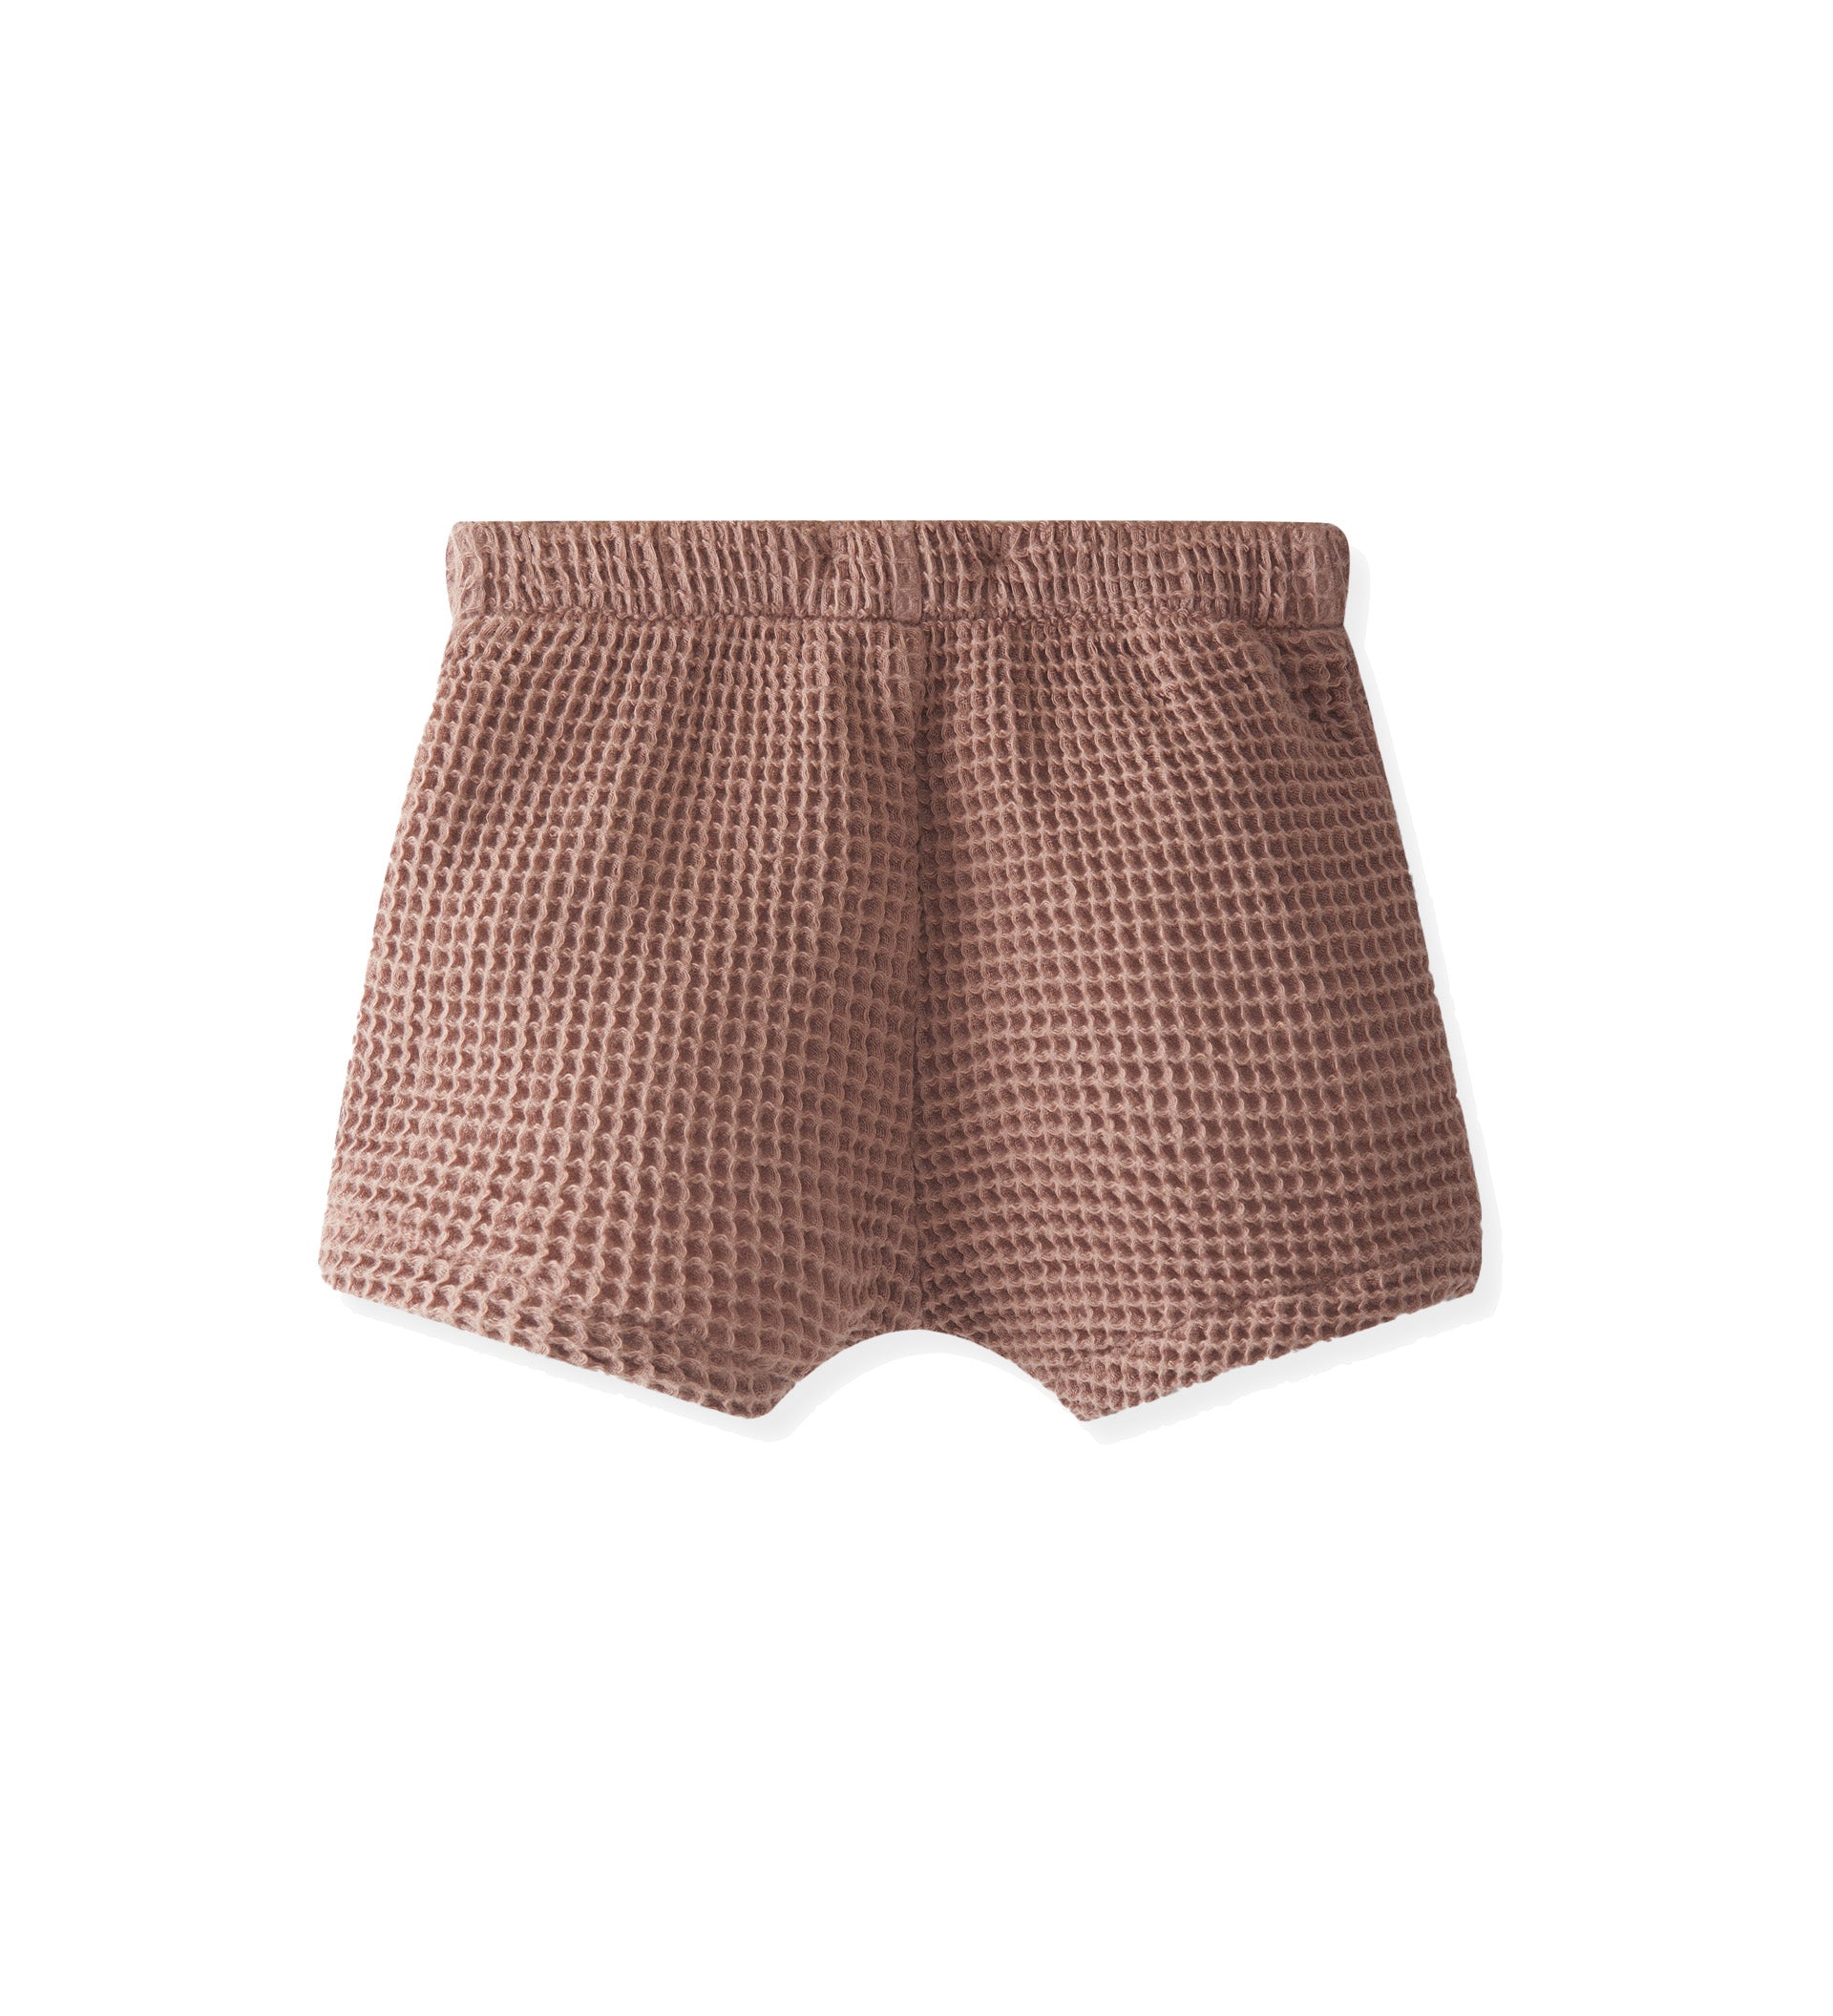 Snug shorts waffle texture mauve color